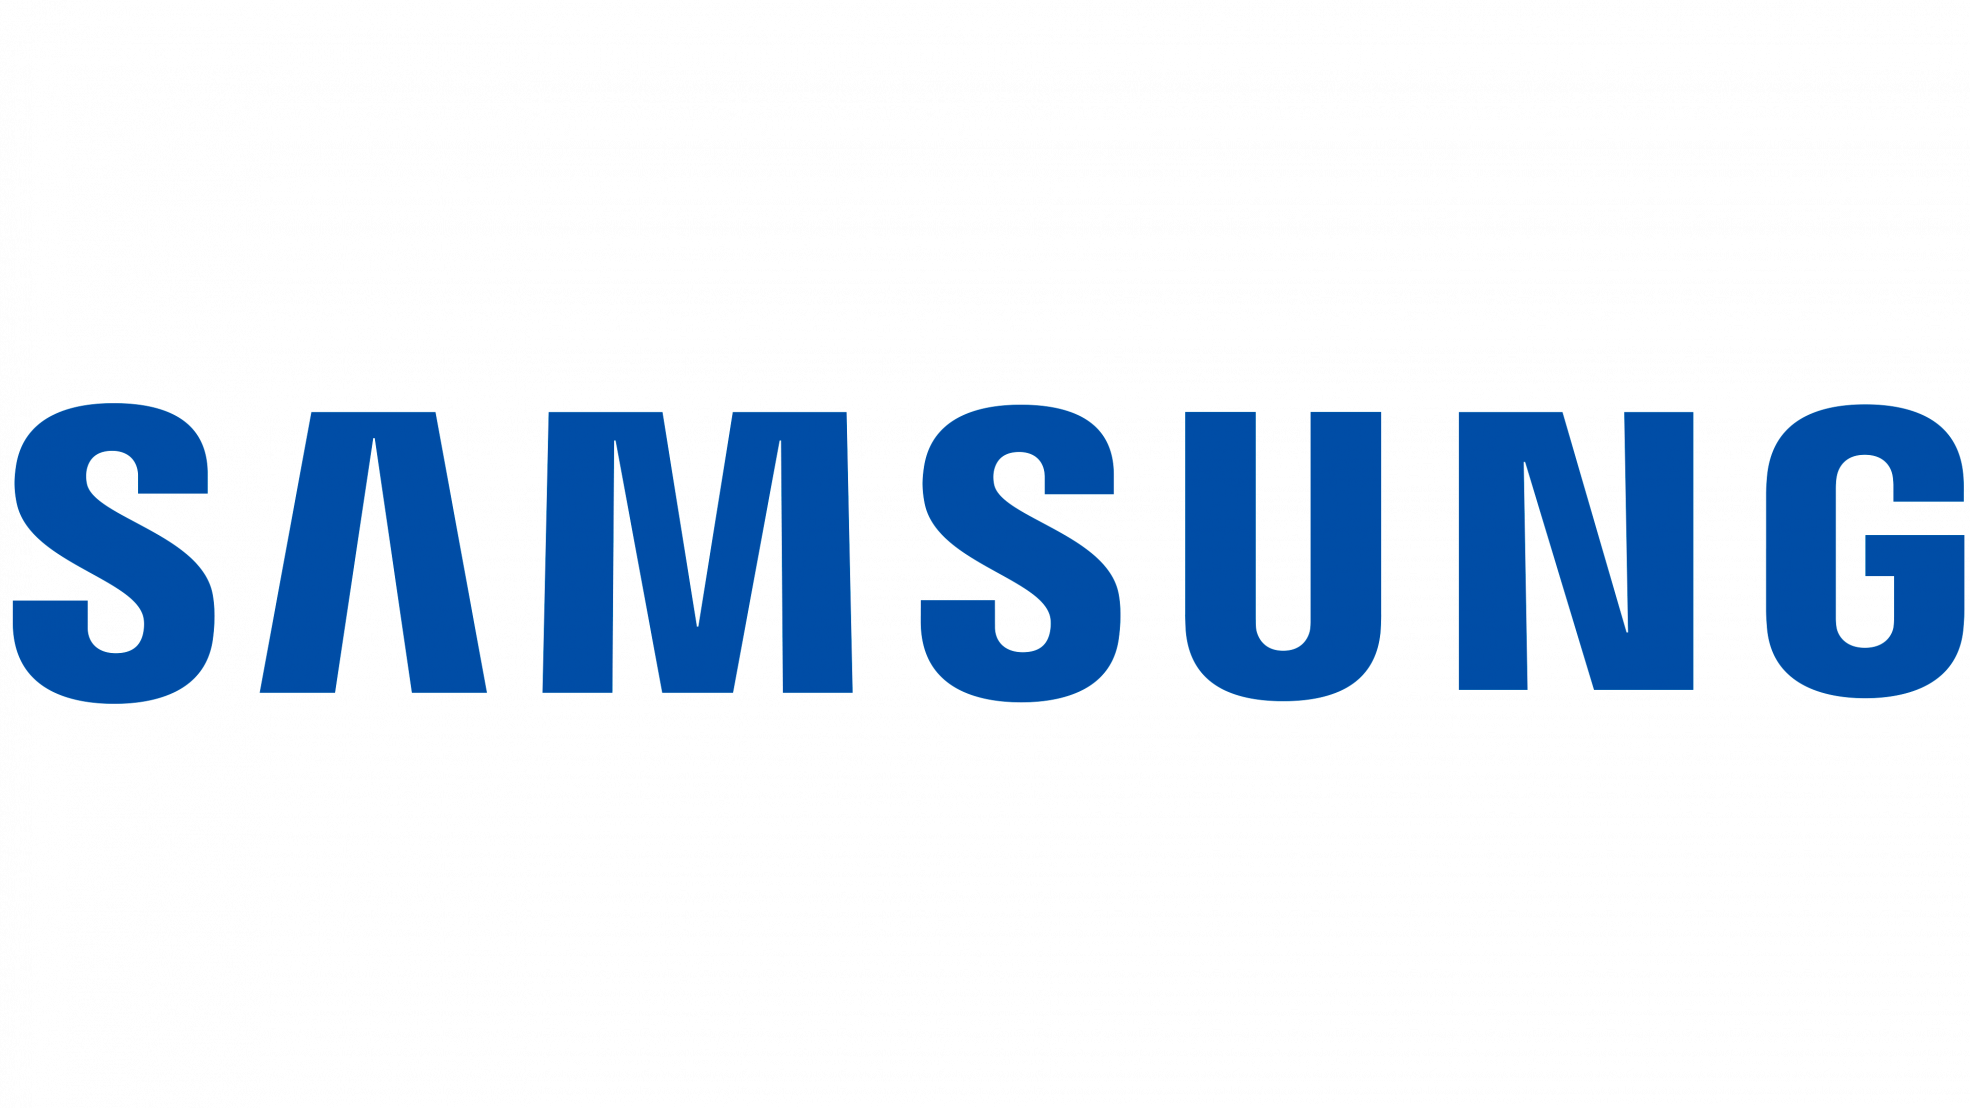 //daihoangvu.com/files/images/Samsung-Logo.png